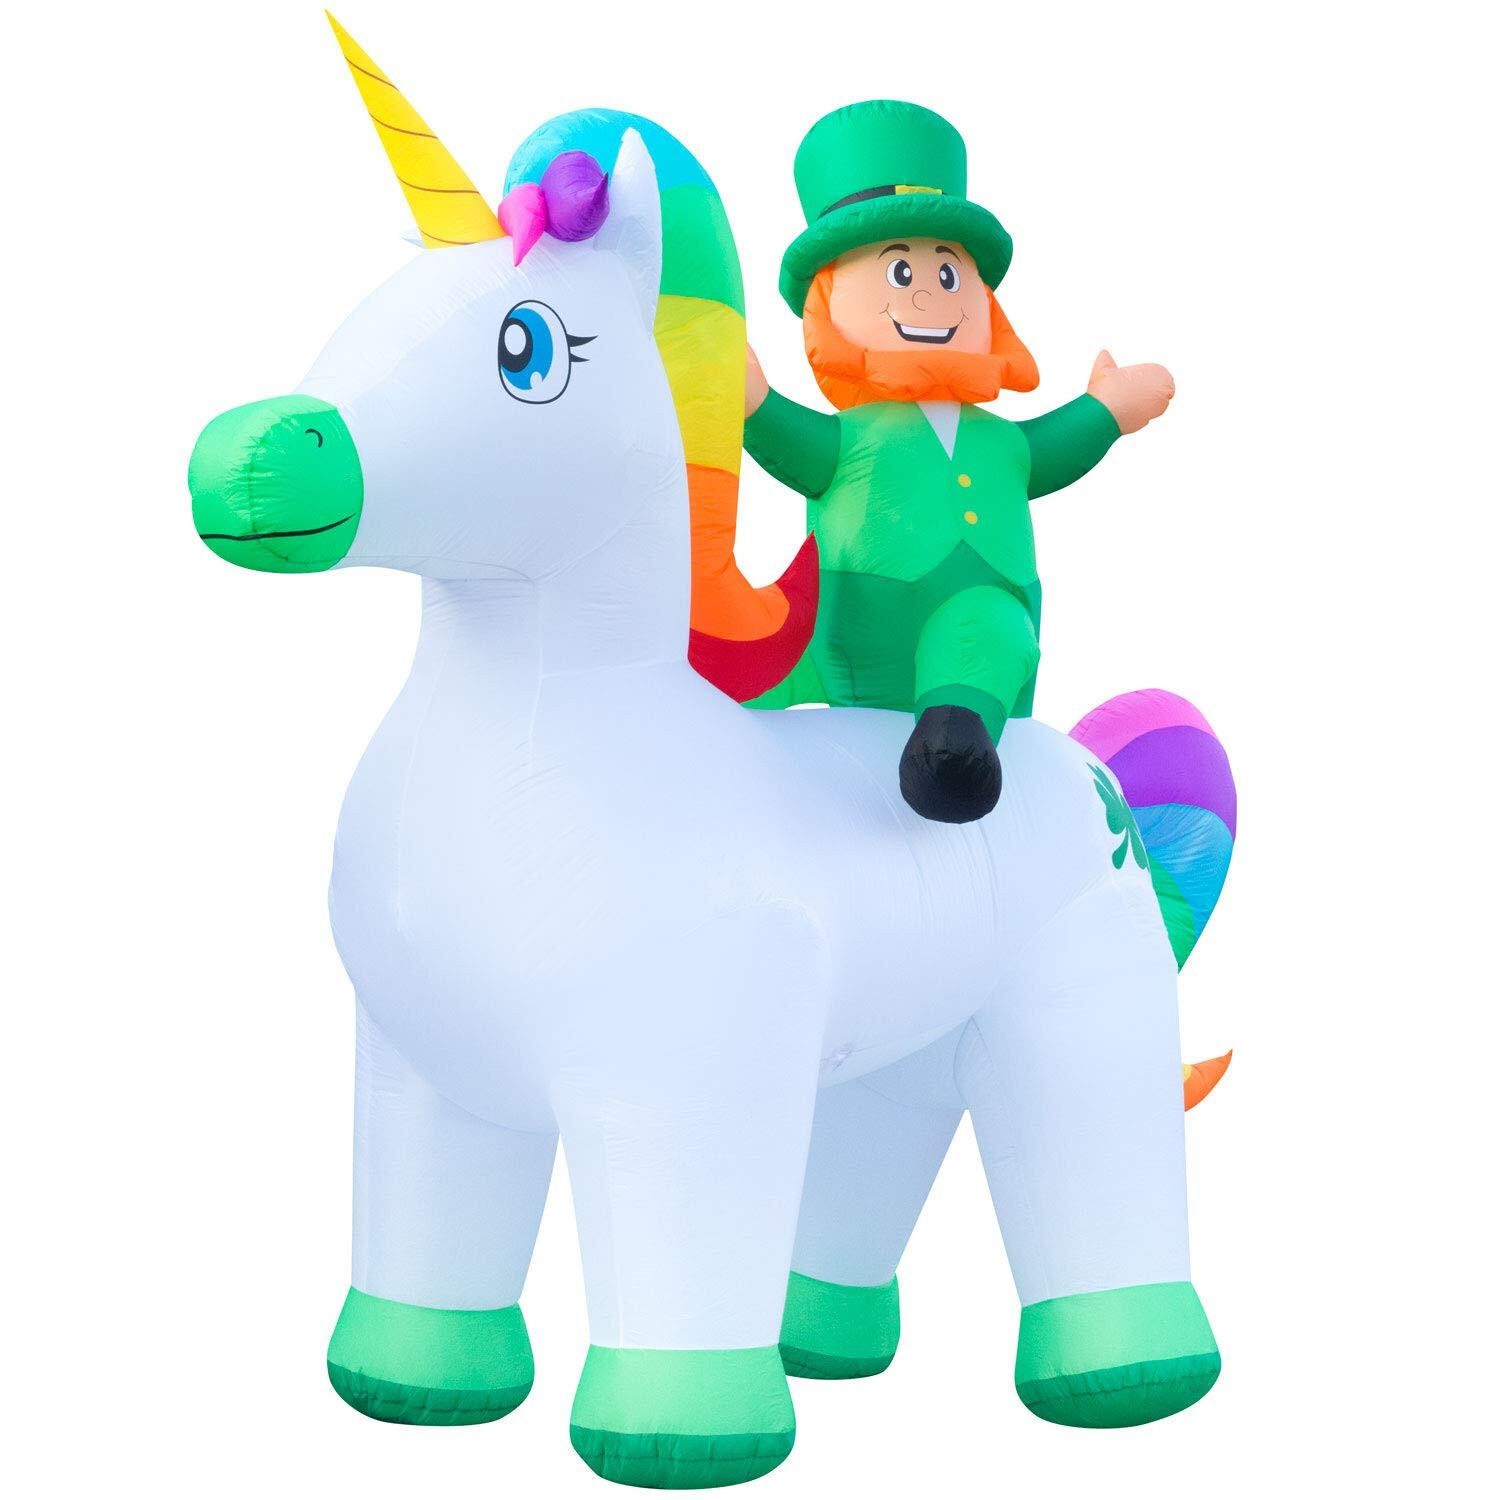 Holidayana 9ft St Patricks Day Inflatable Leprecha